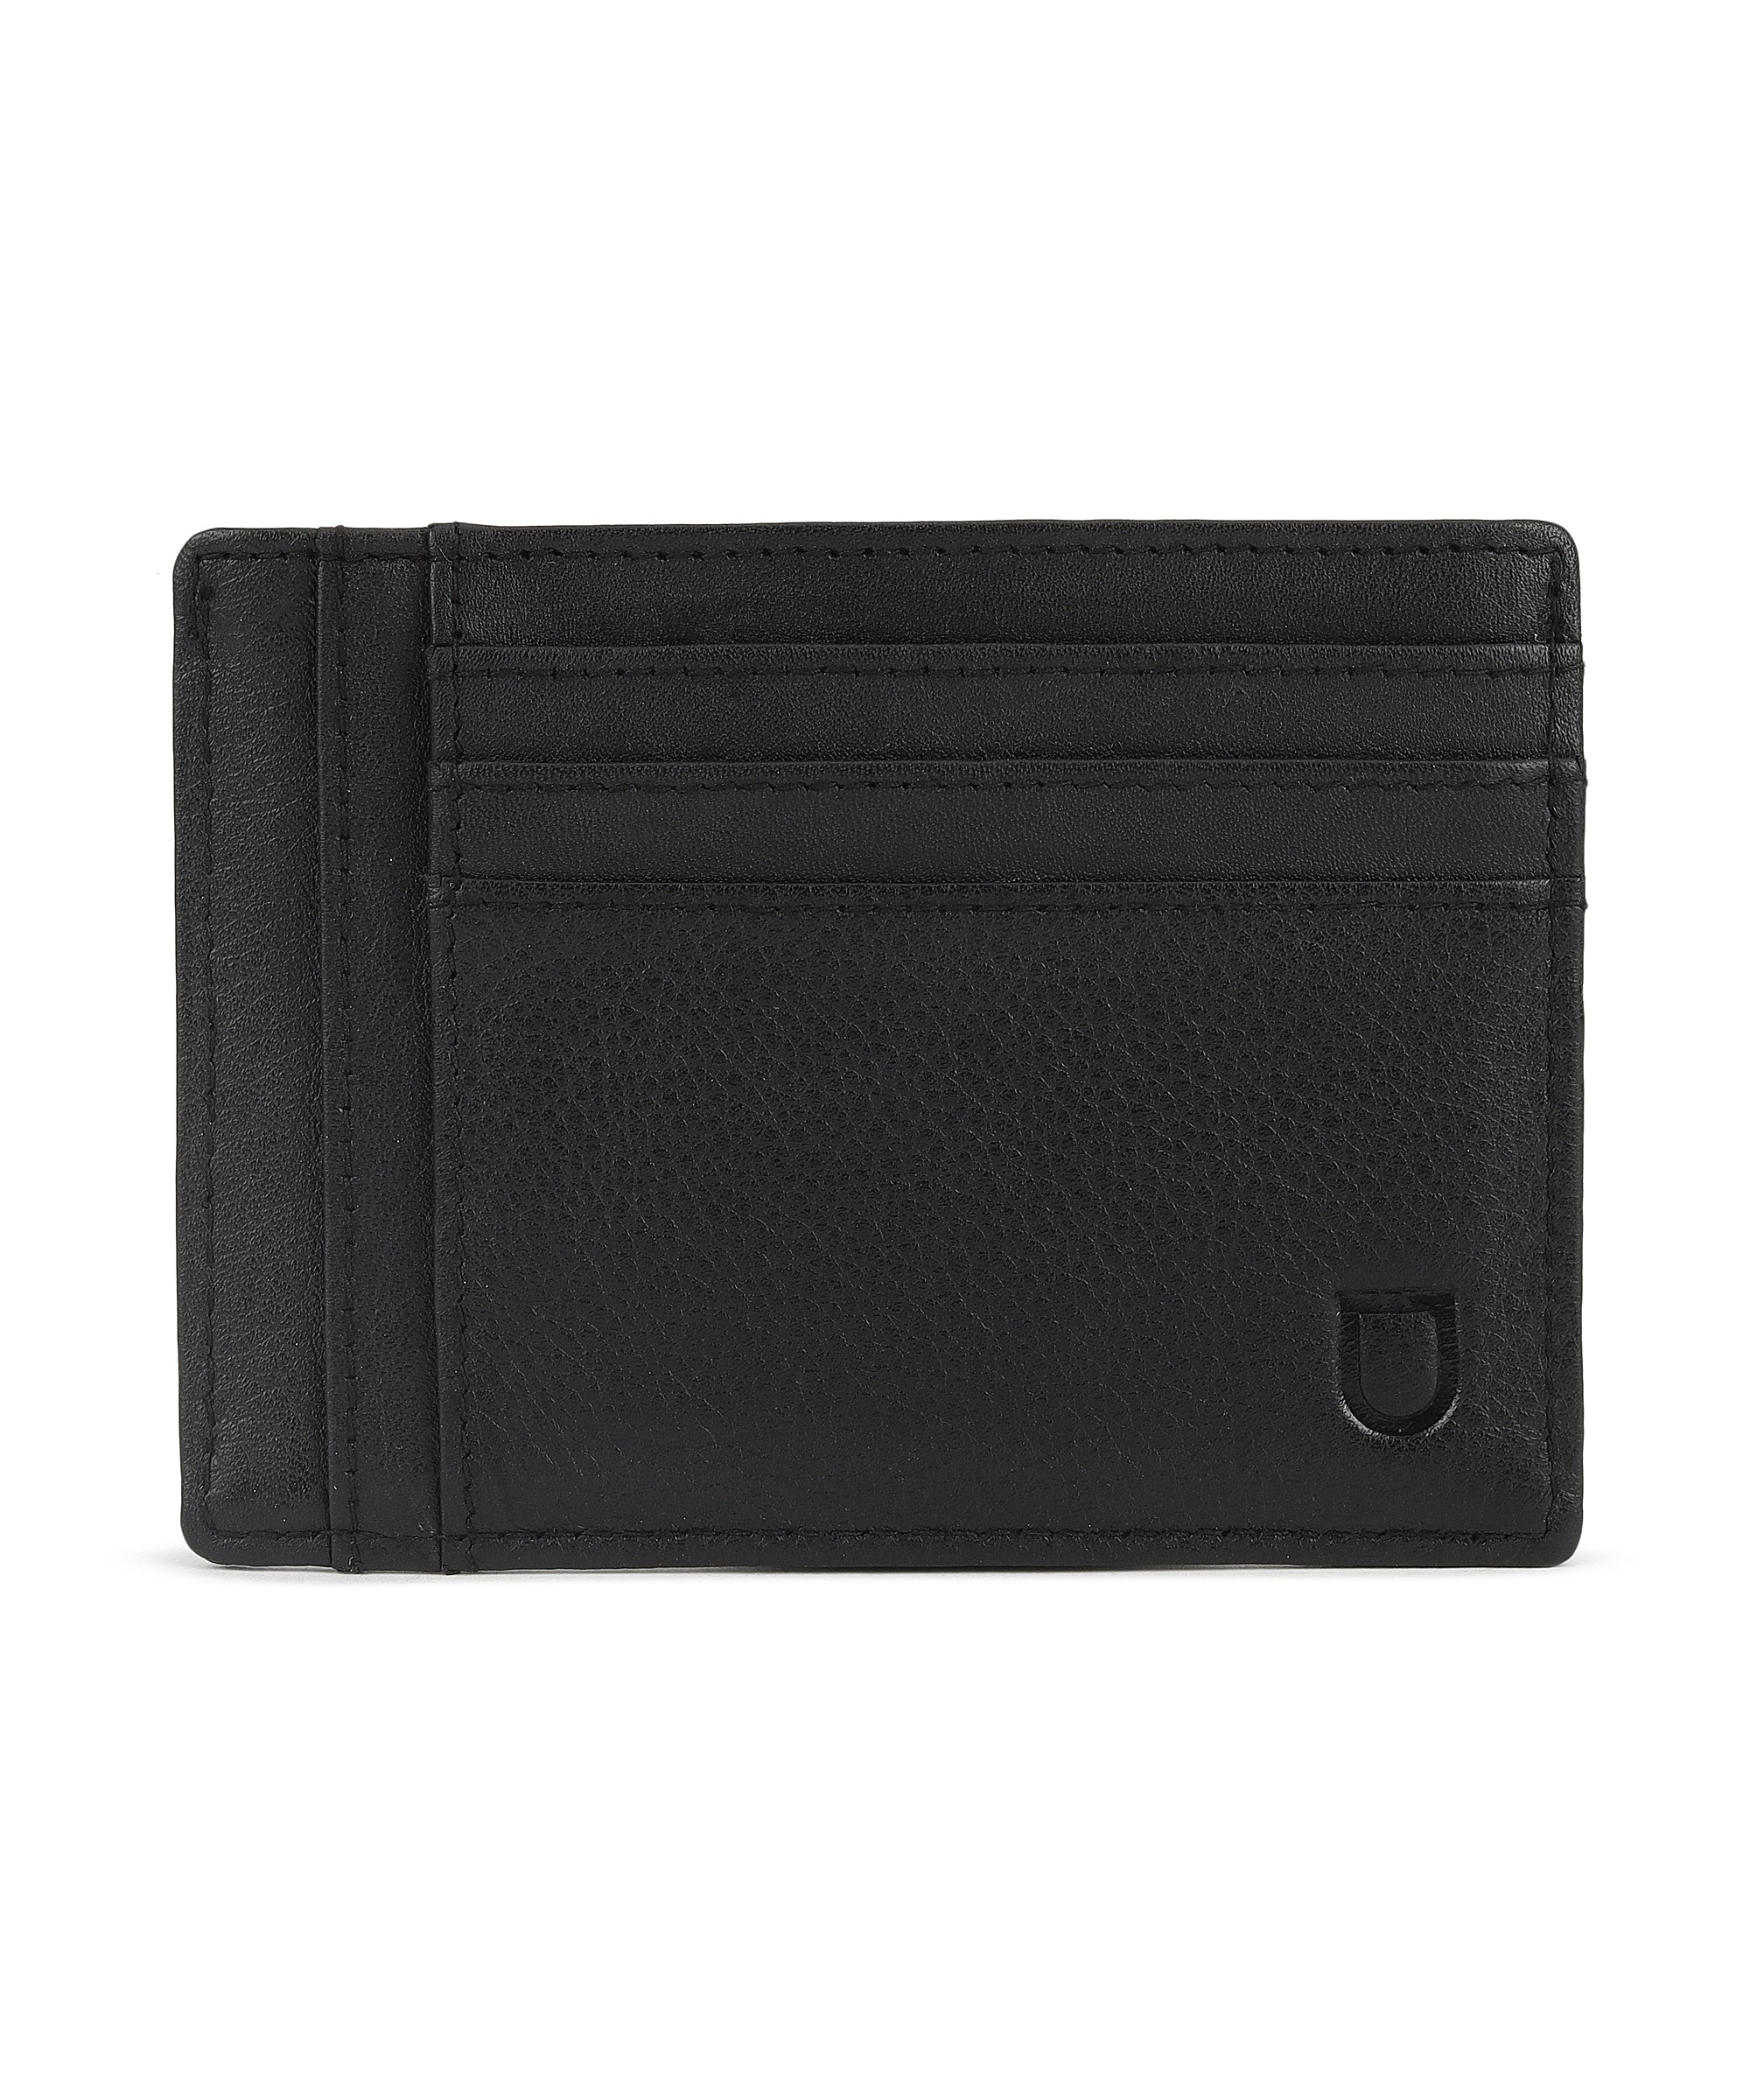 Urbano Fashion Men's Casual, Formal Black Genuine Leather Wallet-5 Card Slots